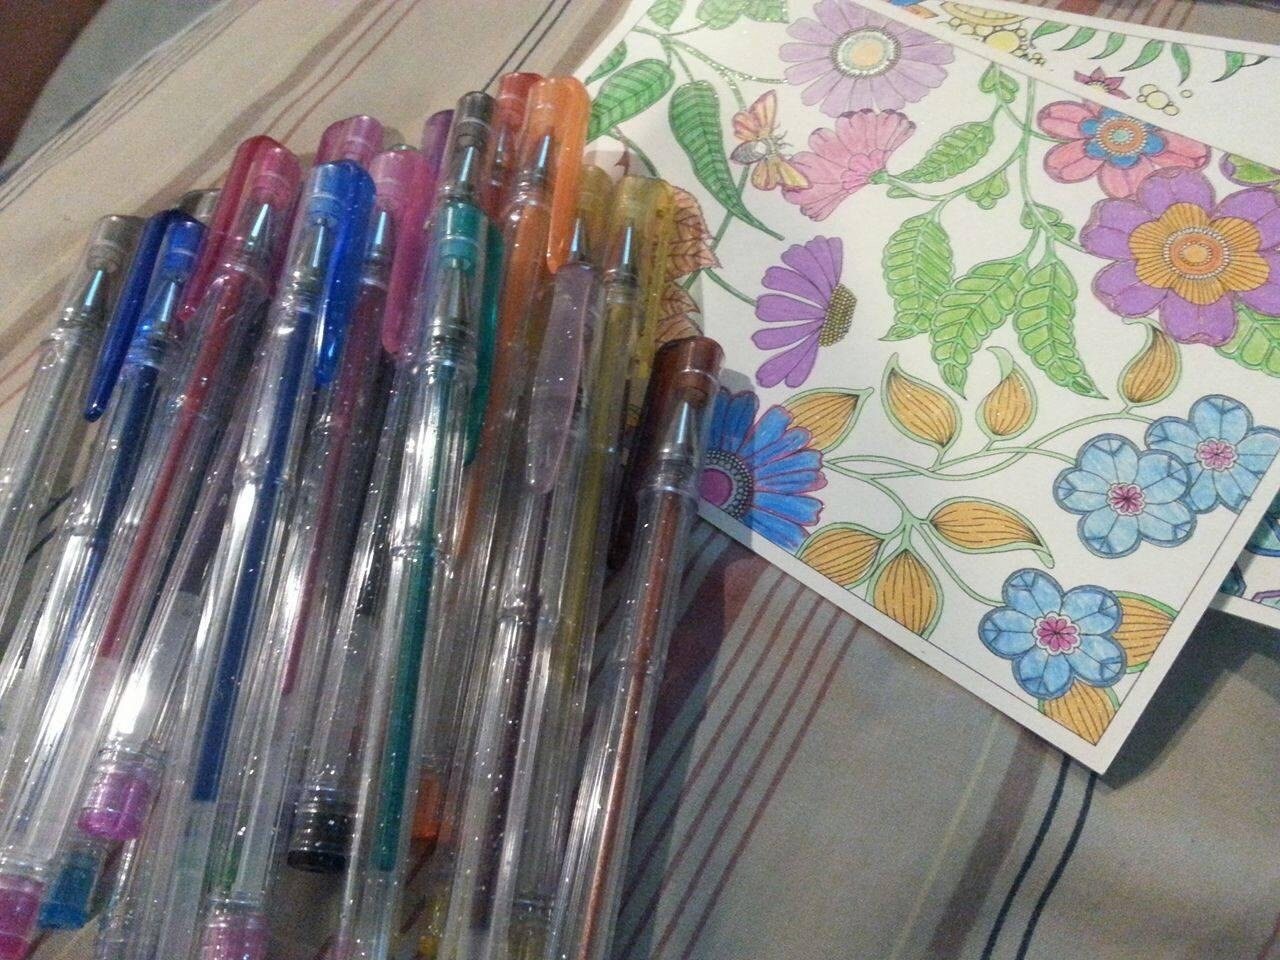 100 Unique Coloring Gel Pens Adult Coloring Books, Drawing, Bible  Journaling, Planner, Scrapbooking Gel Pens Neon Pastel Metallic Glitter 